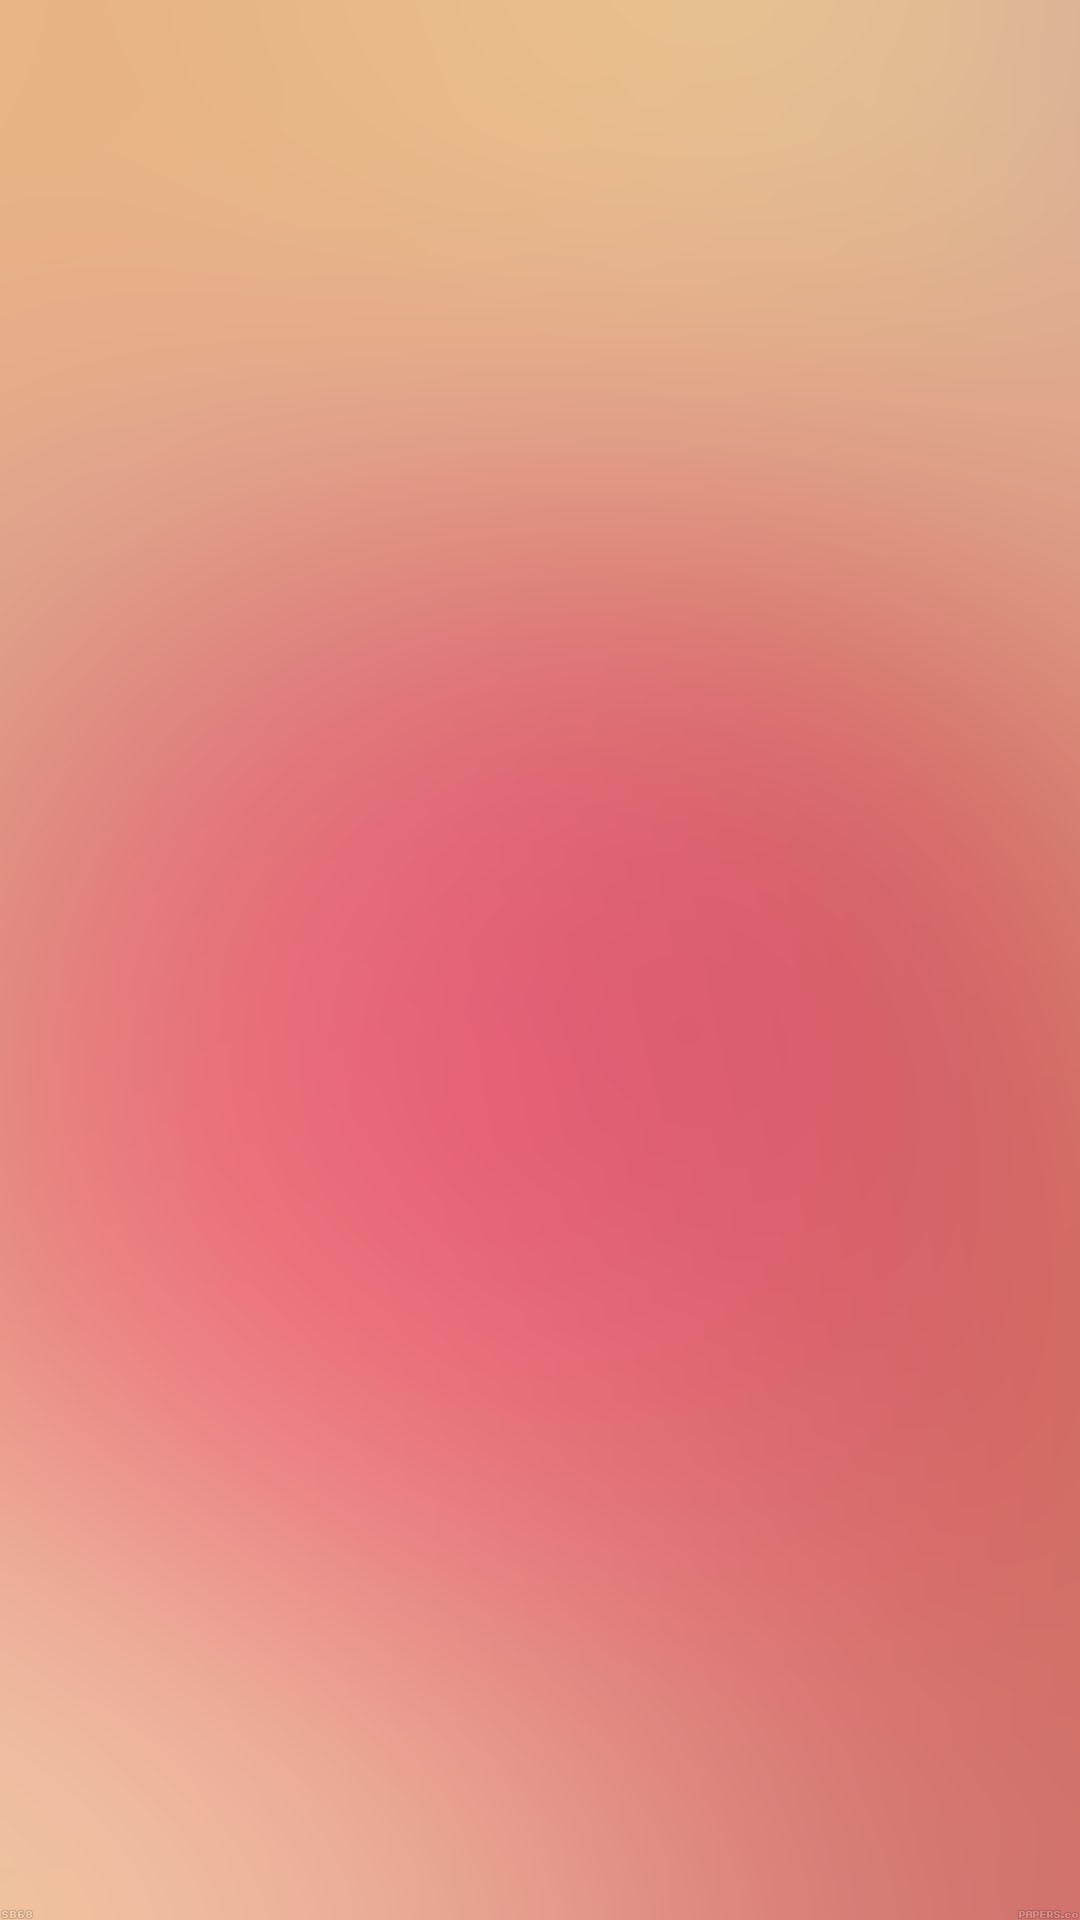 Wallpaper pink love blur iPhone 6 Plus Wallpapers – blur rules iPhone 6 Plus Wallpapers – love 5 stars nice iphone 6 plus wallpapers to express your best